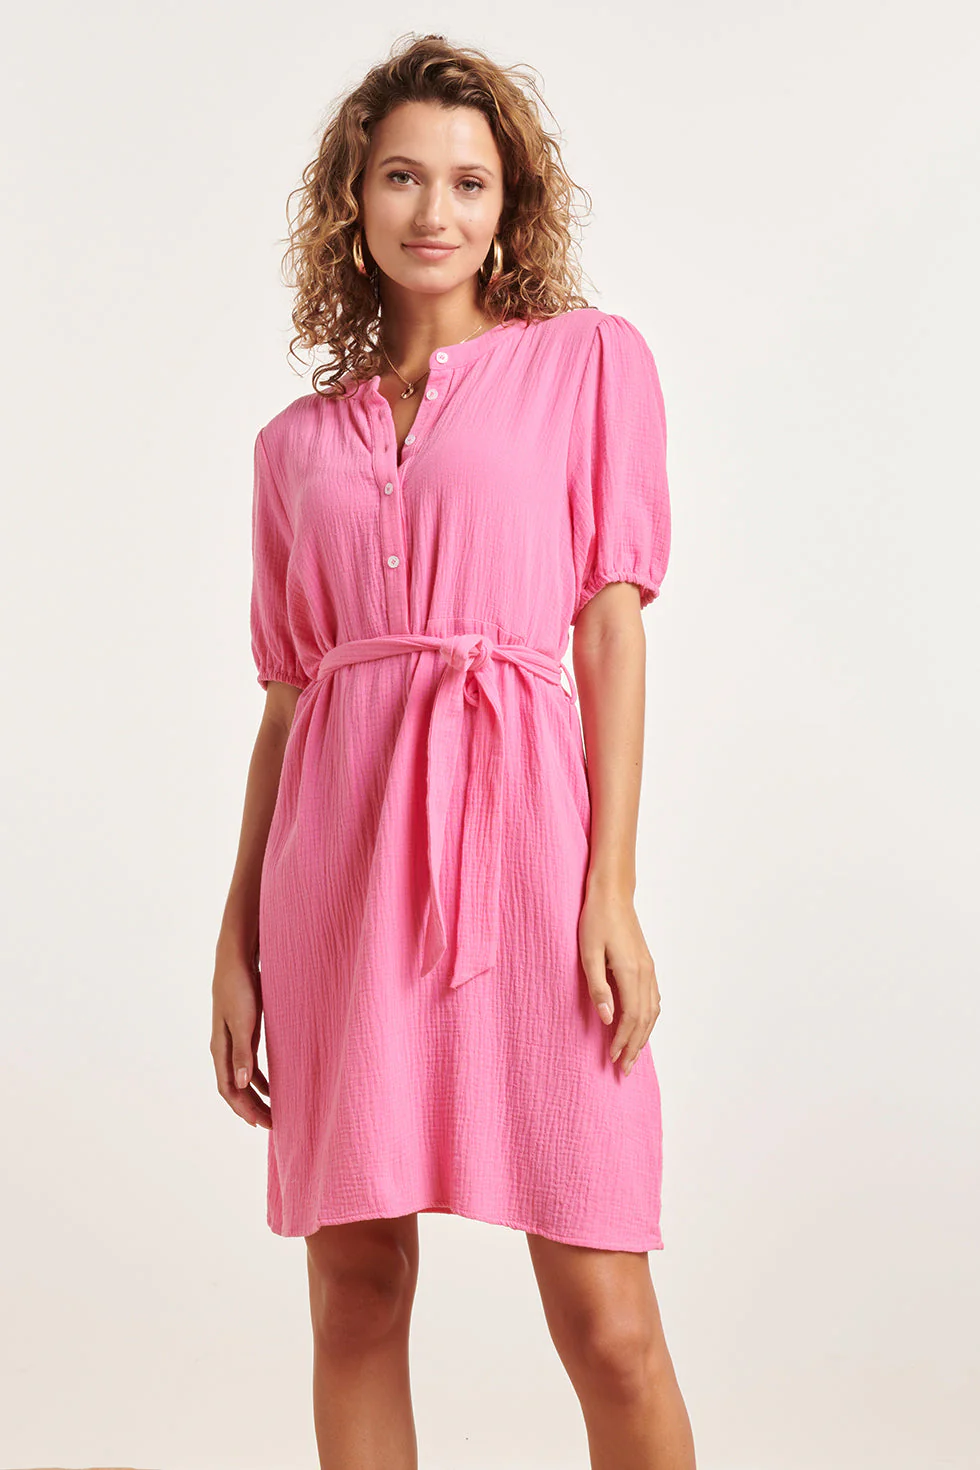 Smashed Lemon 24350 stijlvol roze korte jurk